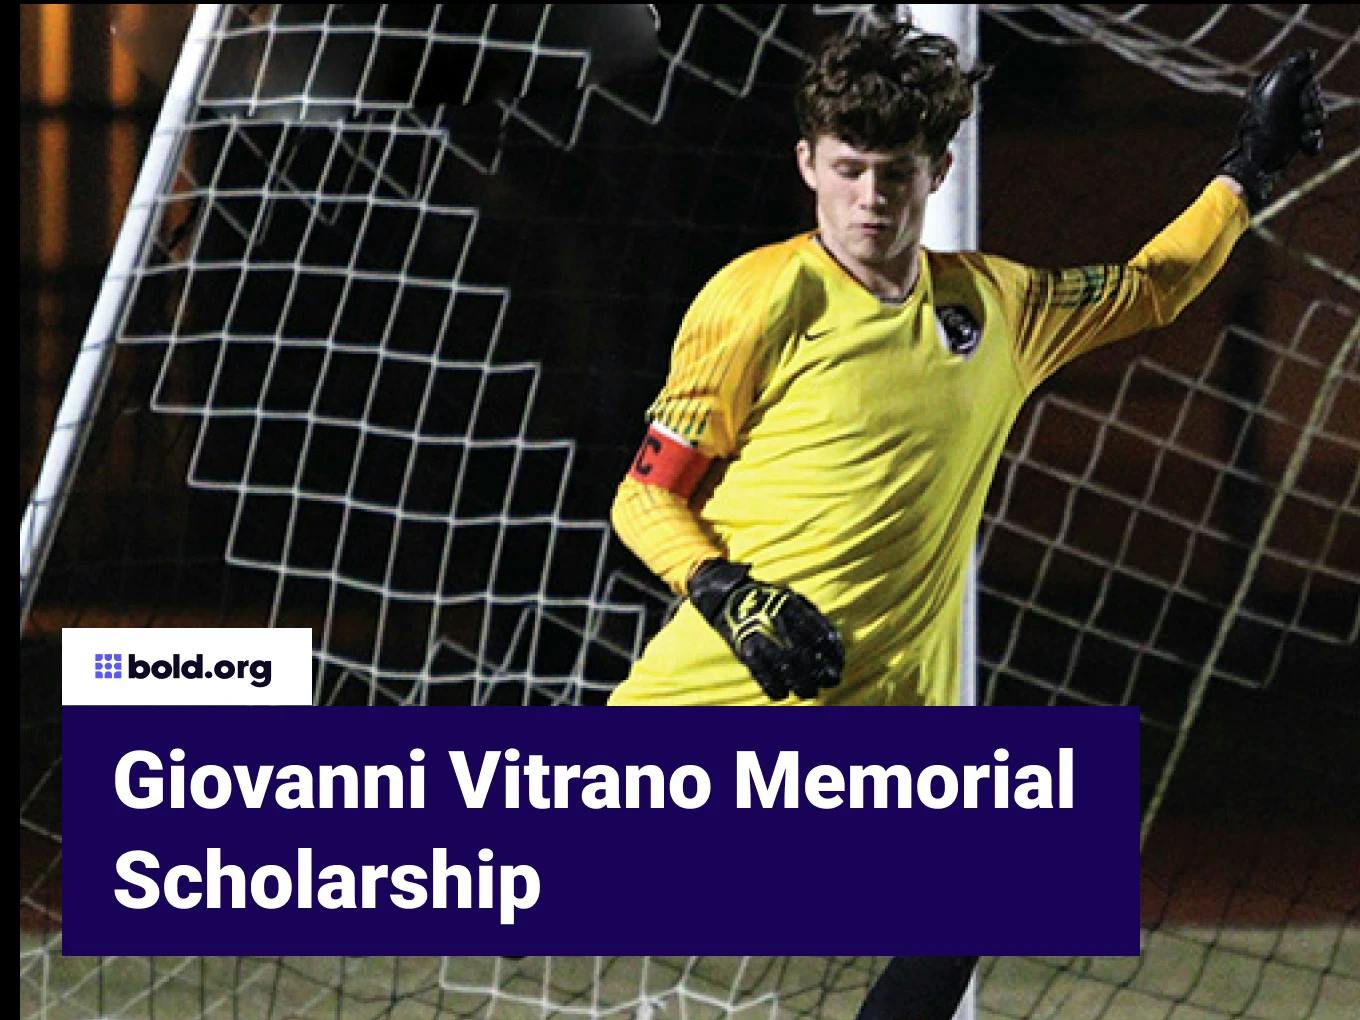 Giovanni Vitrano Memorial Scholarship